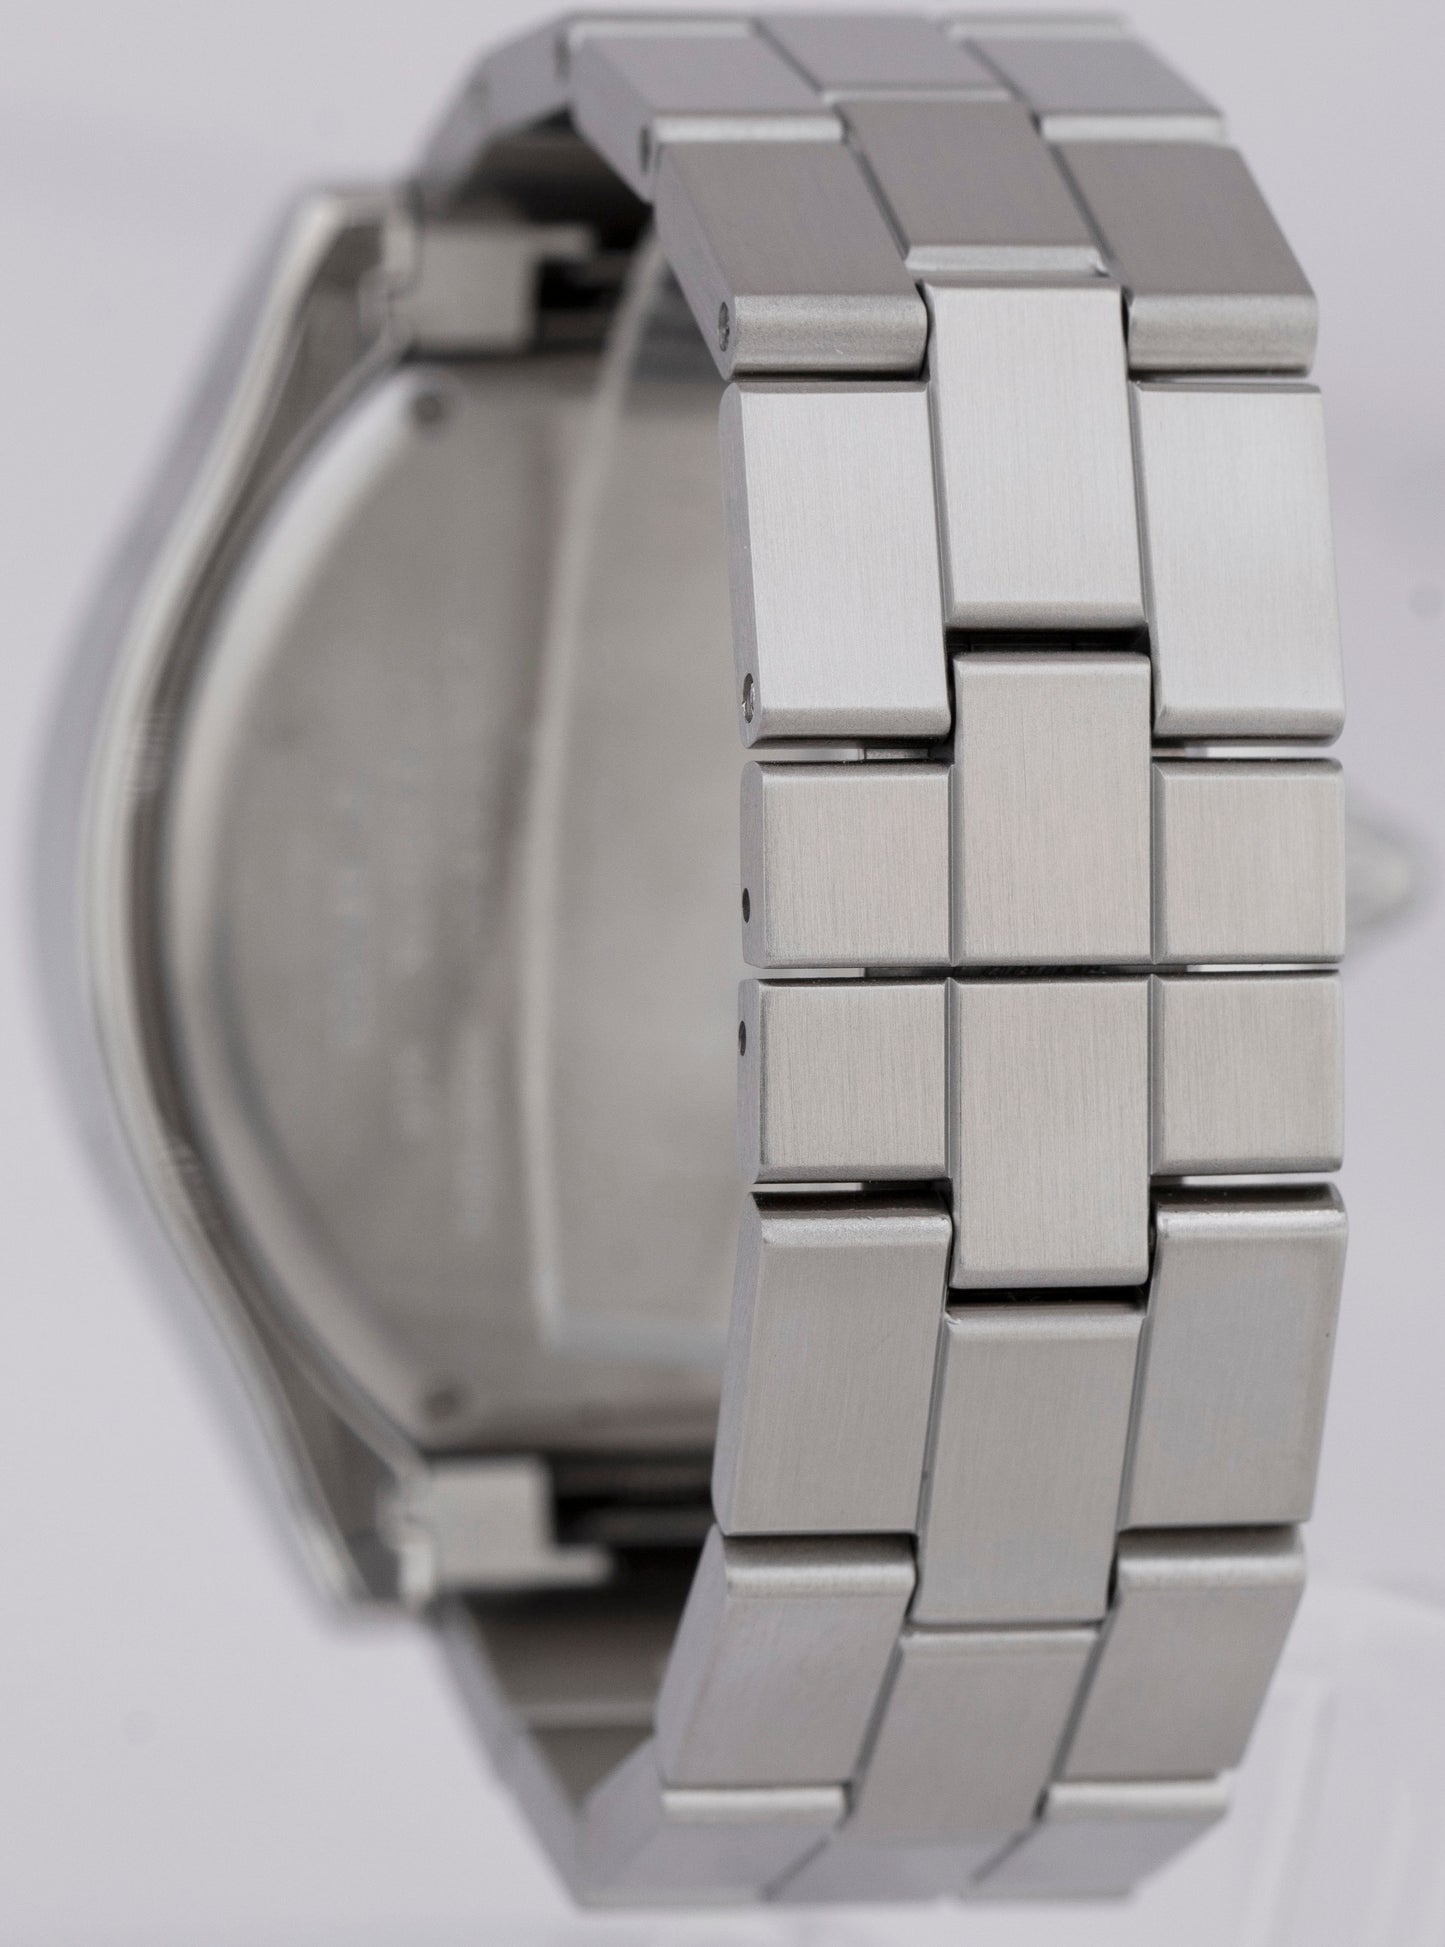 Cartier Roadster Silver Roman 44mm Steel Chronograph Watch 3405 / W6206019 BOX